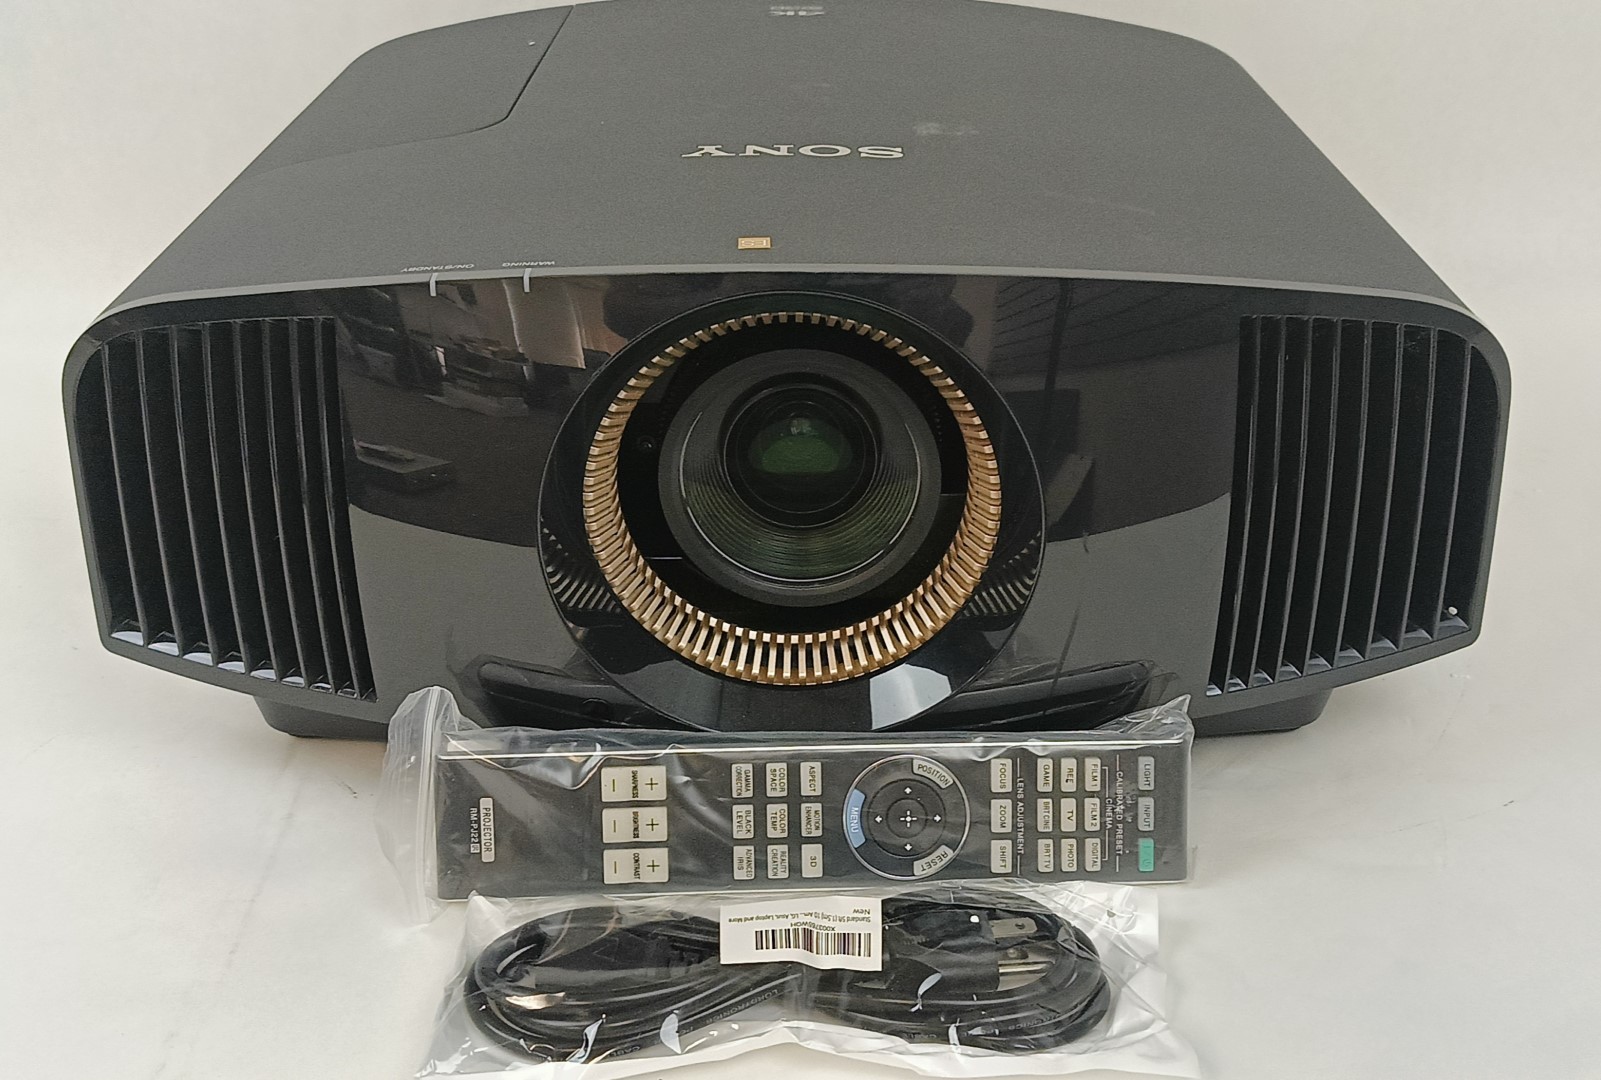 Sony VPL-VW695ES 4K Projector Black - 1003 Hrs